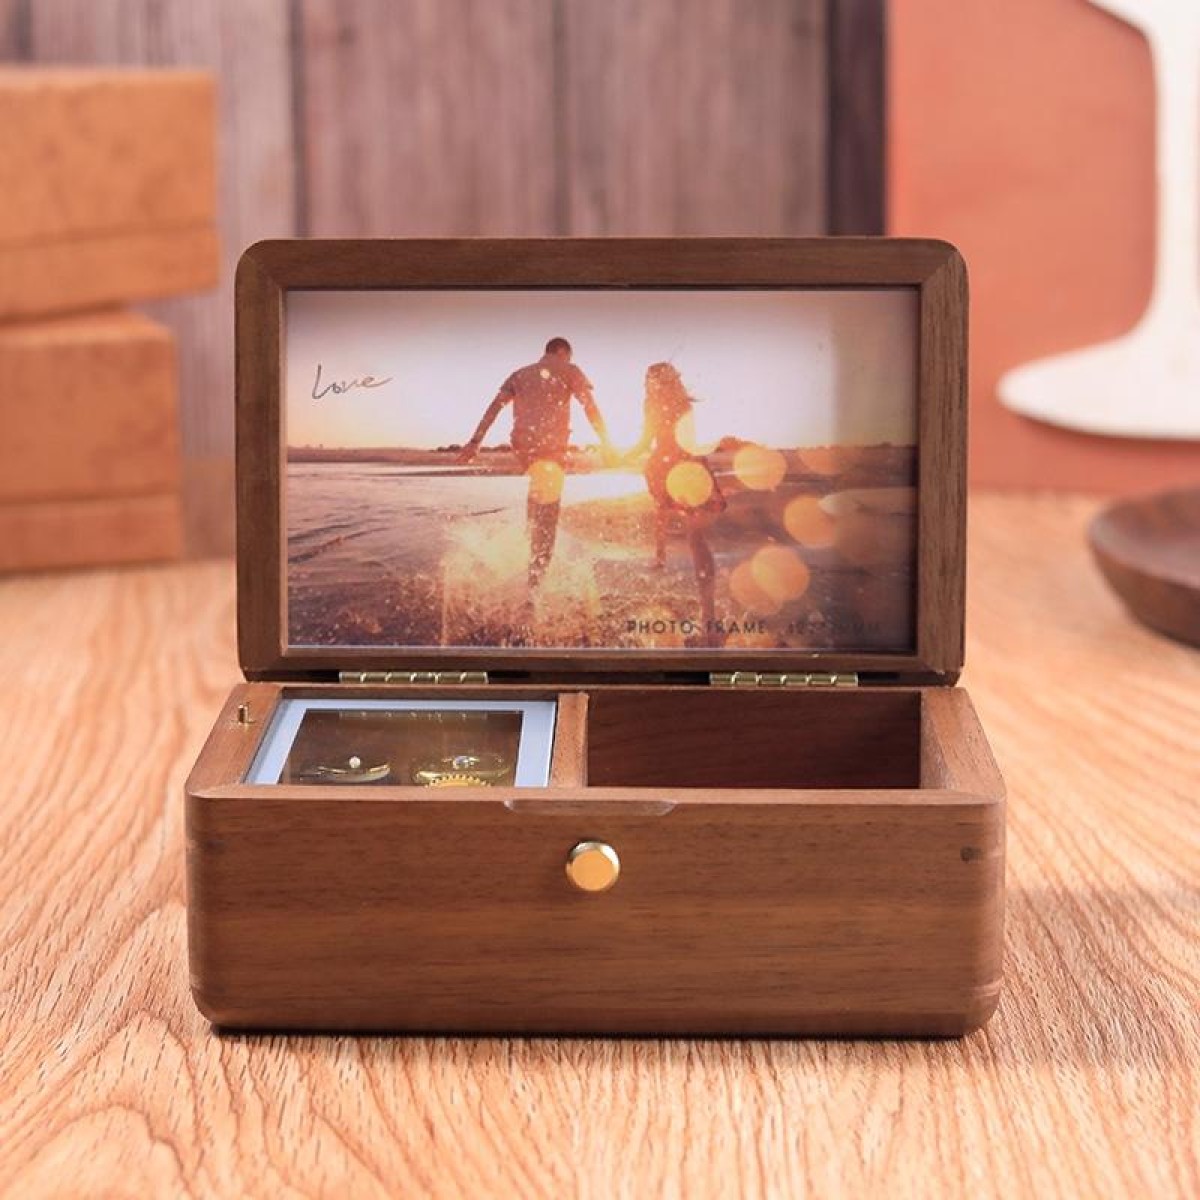 Wooden Jewelry Storage Music Box with Photo Frame Function, Spec: Walnut